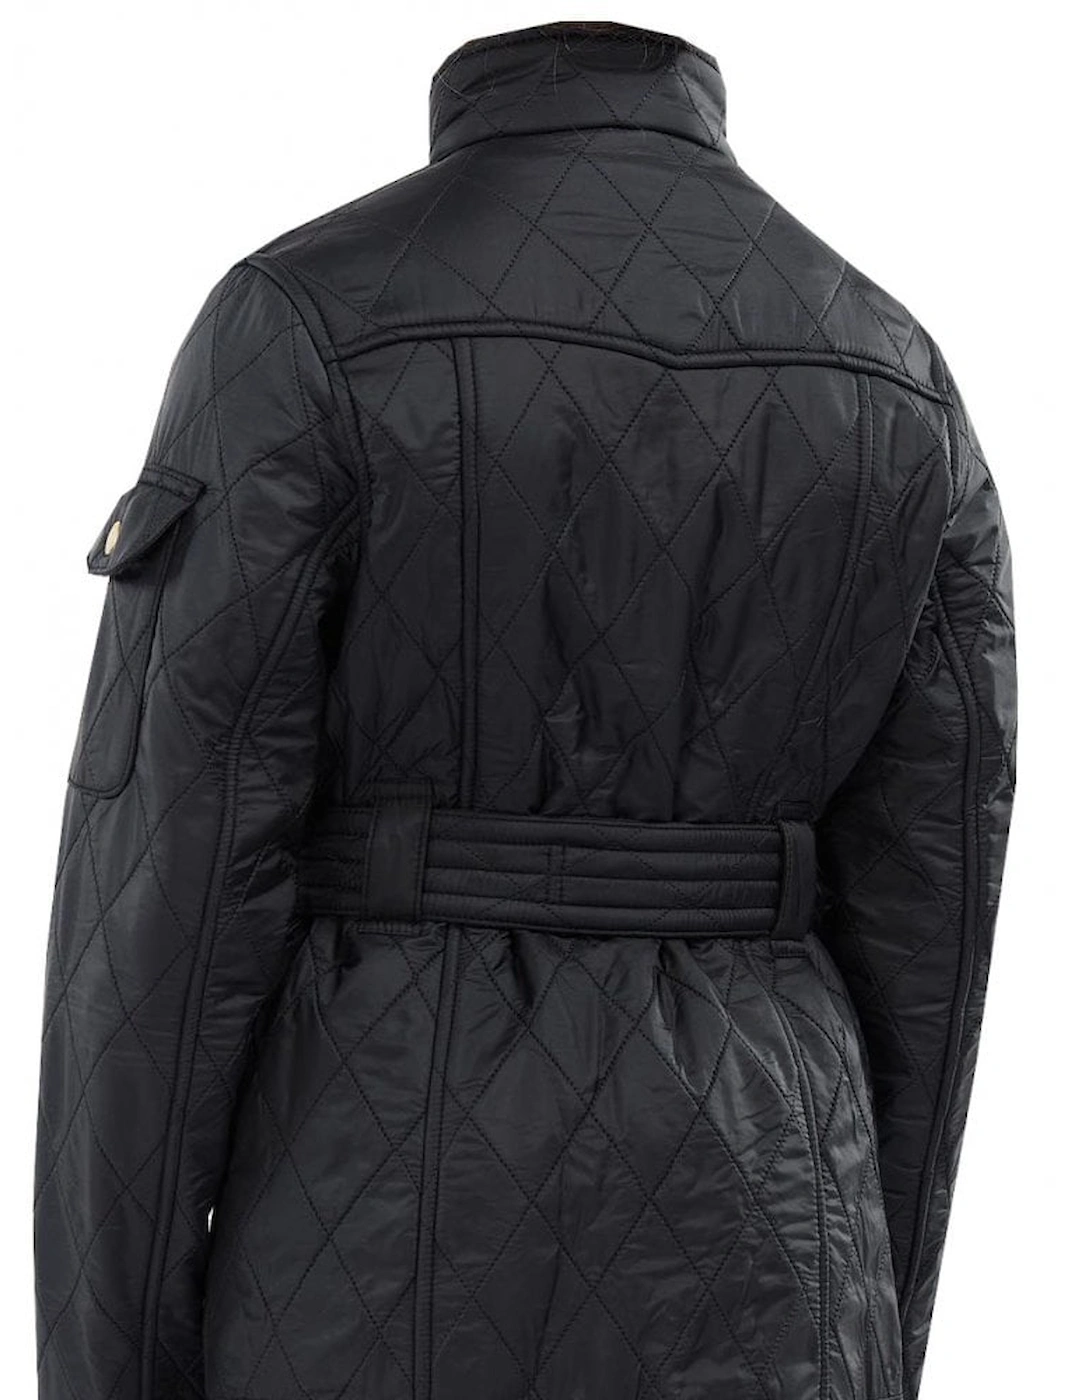 Internatinal girl's Black Enduro Quilted Jacket